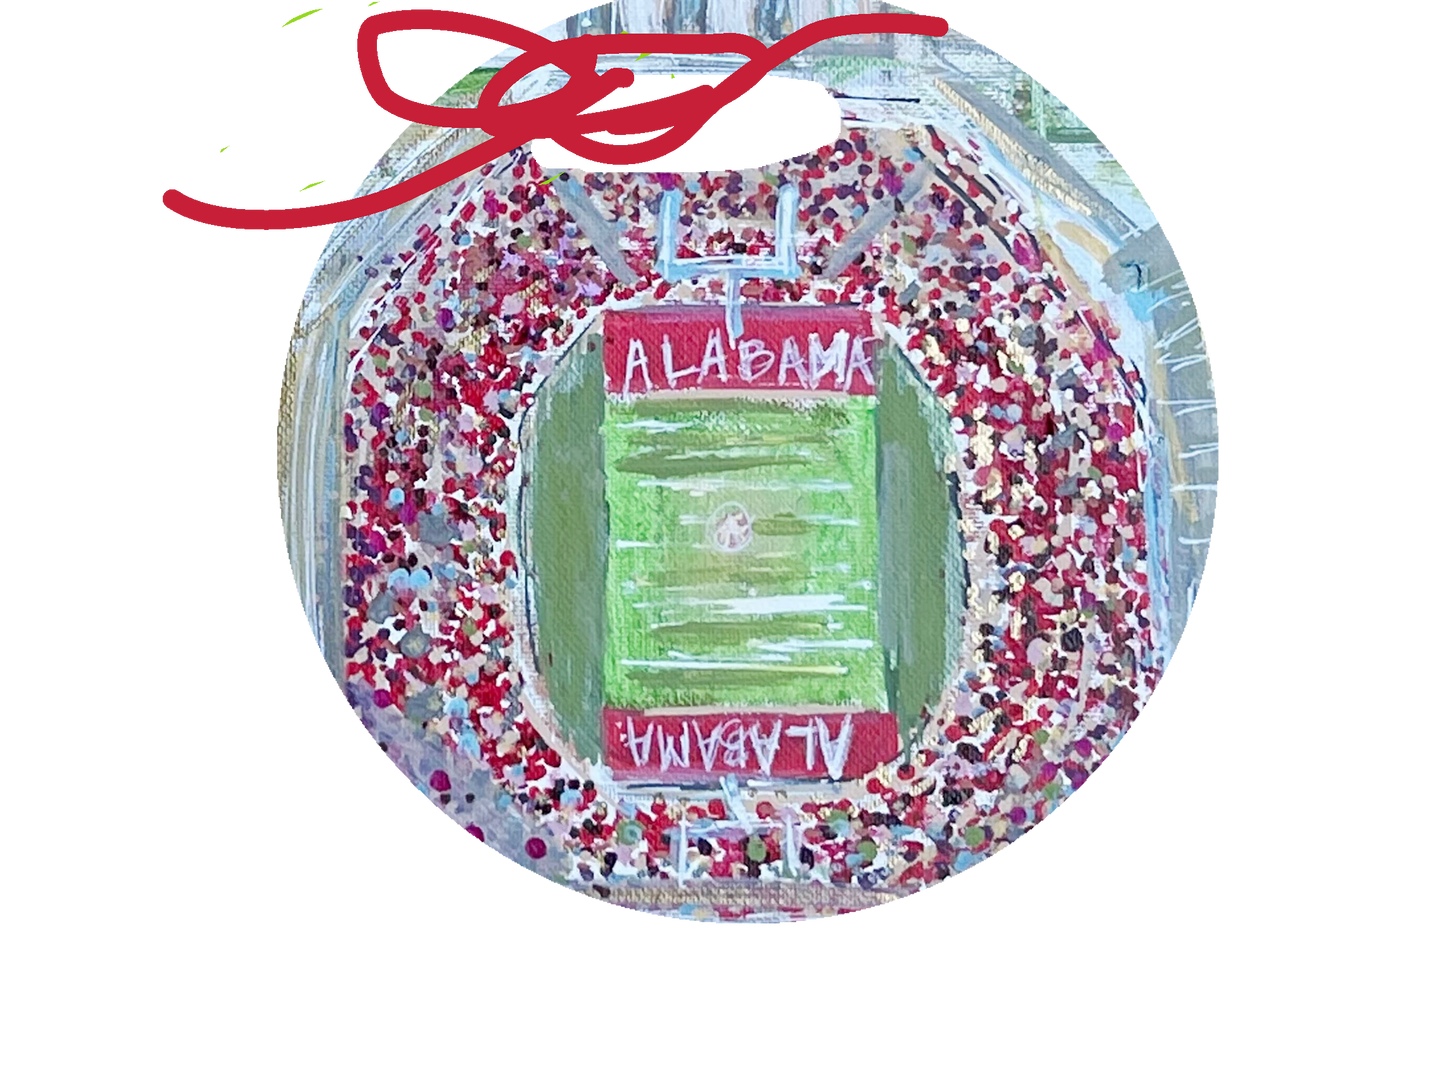 Alabama Stadium